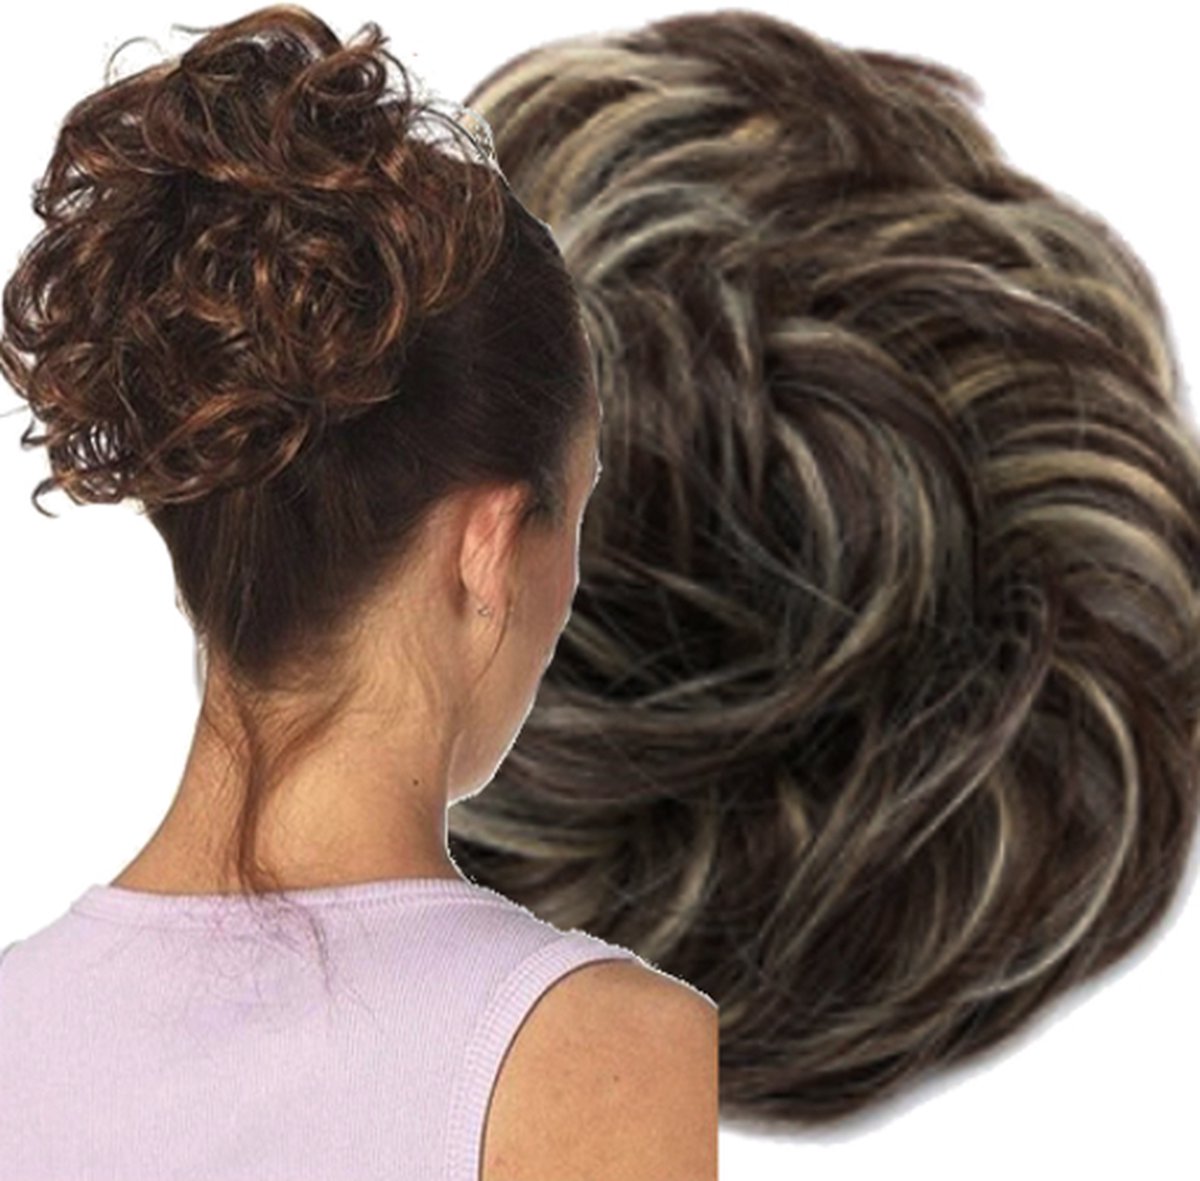 Messy Hair Bun | Curly Haar Wrap Extension Intens Donkerbruin met Blonde plukjes |Inclusief Luxe Bewaarzakje.*